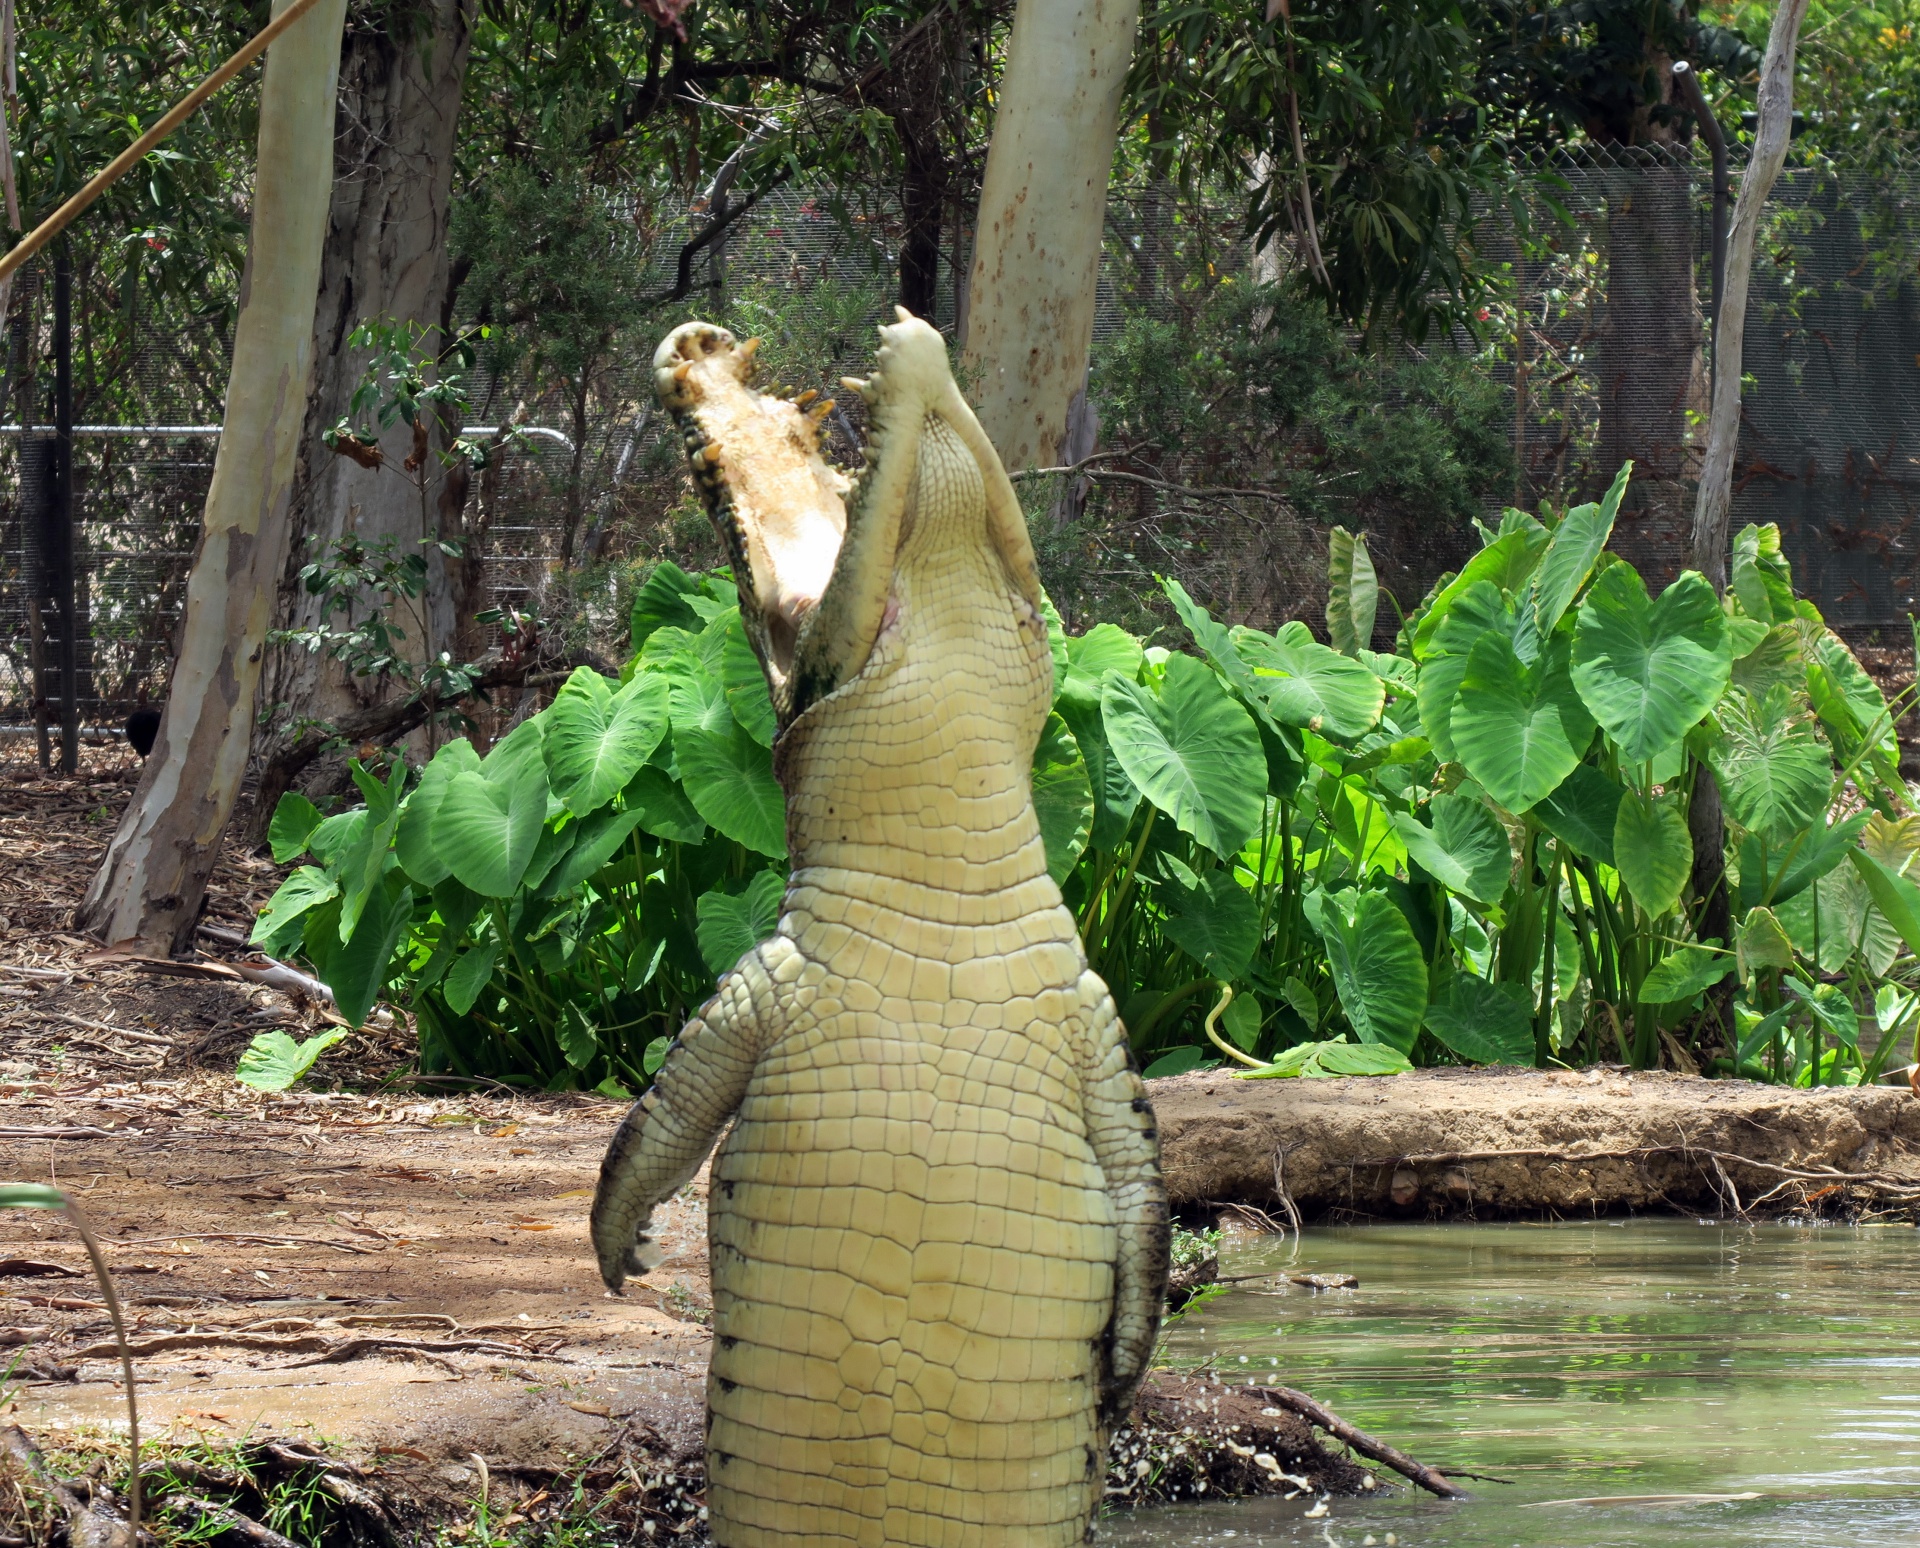 Snappy Tom, the Estuarine Crocodile, getting some food.